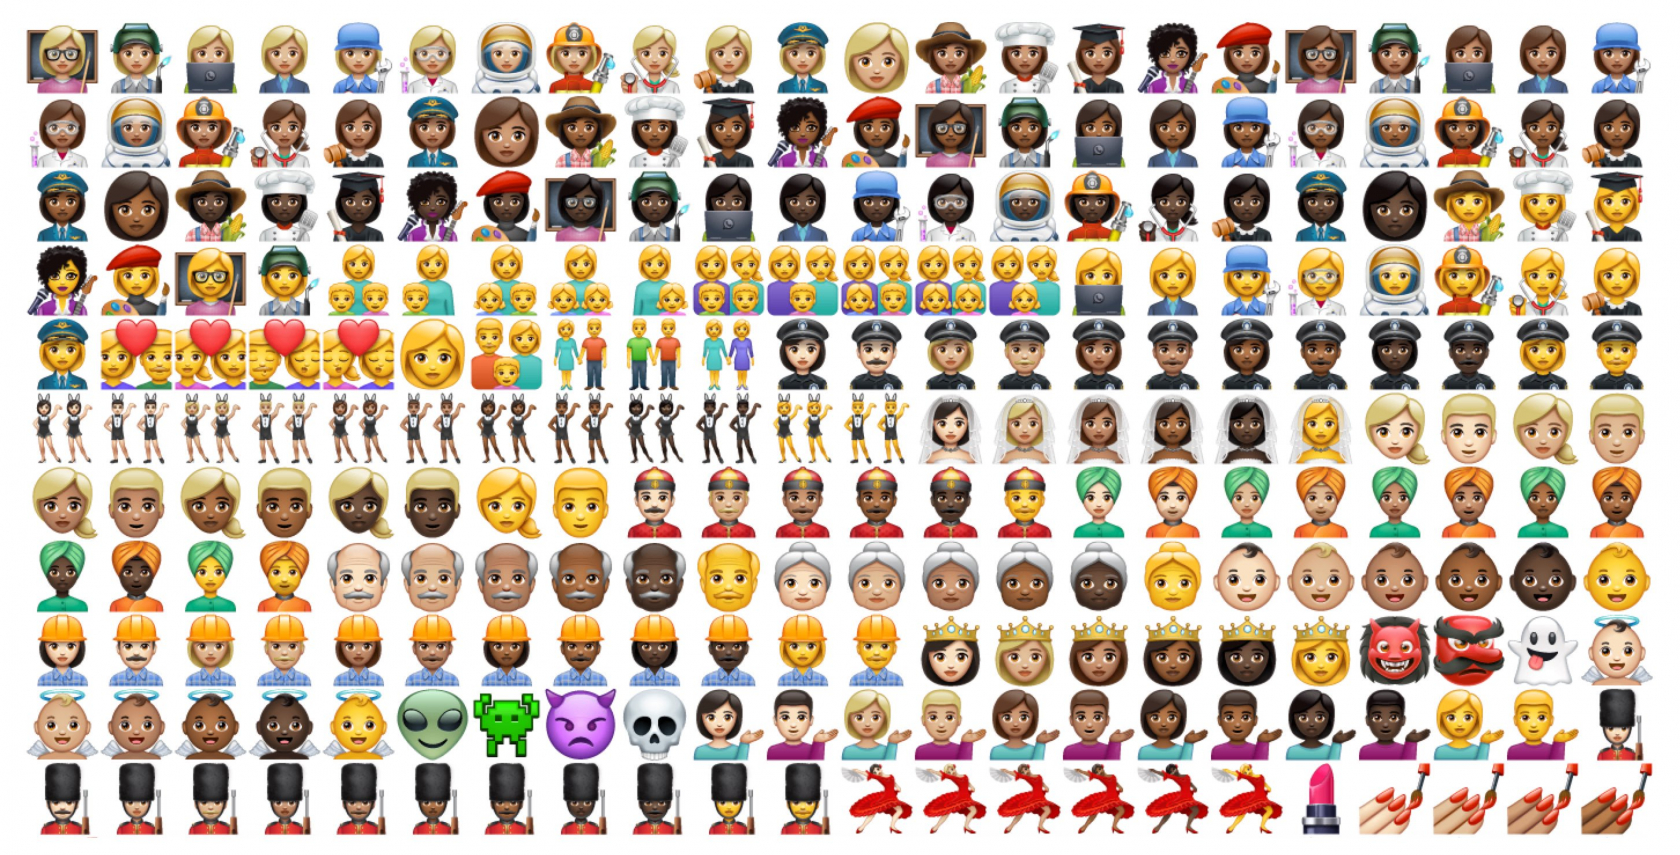 WhatsApp's new emoji look a lot like Apple's